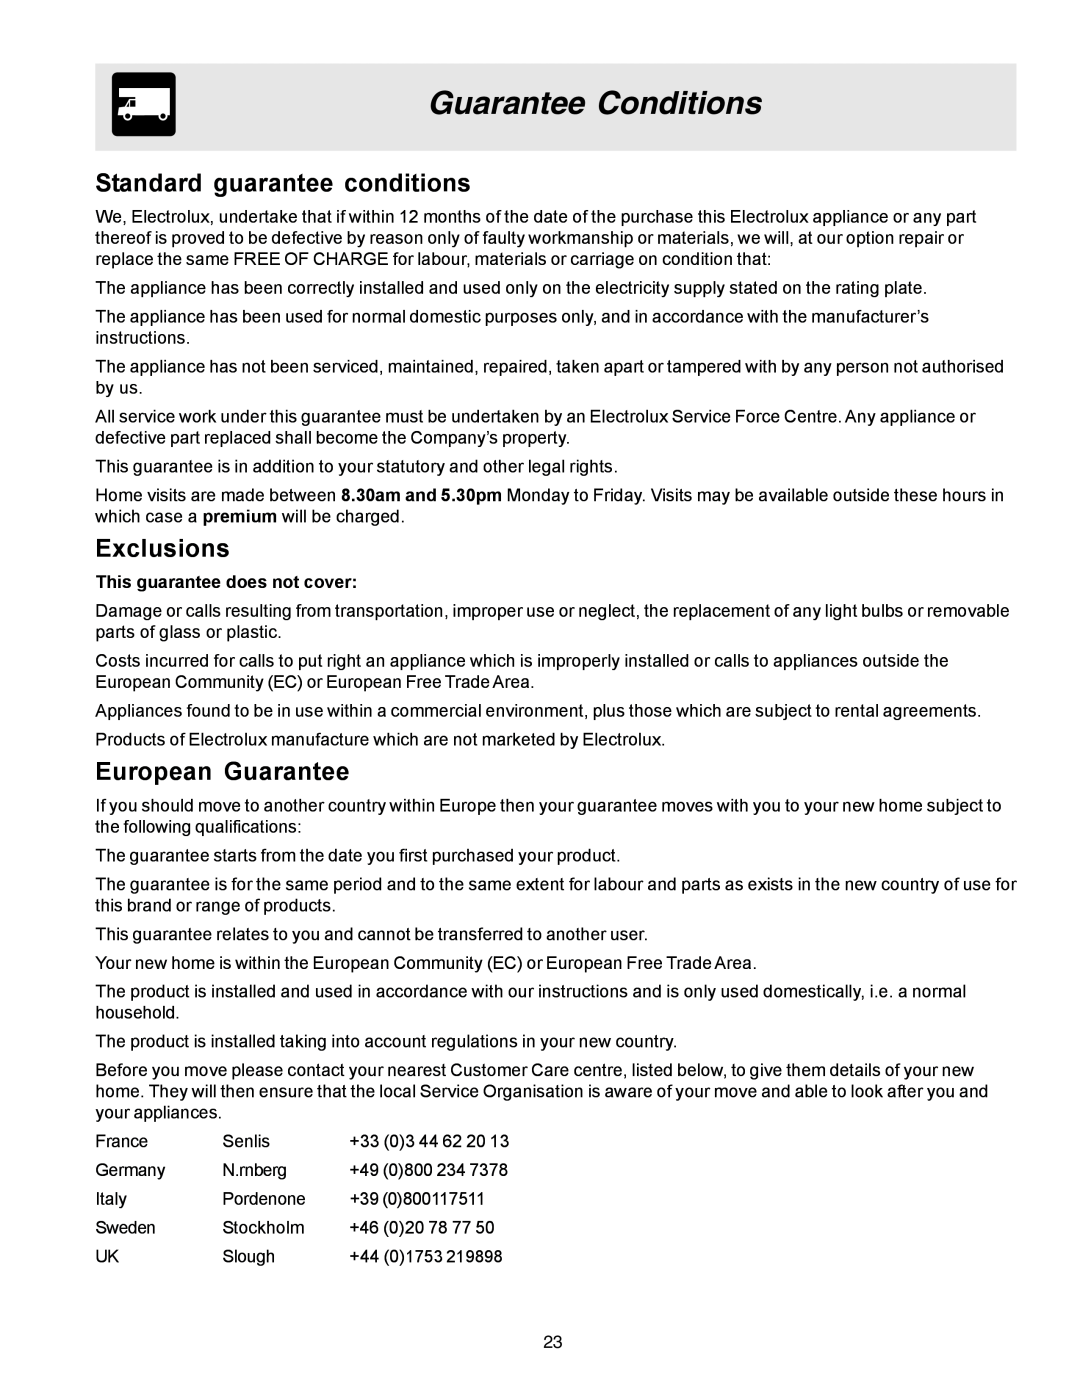 Electrolux U27107 manual Guarantee Conditions, Standard guarantee conditions, Exclusions, European Guarantee 